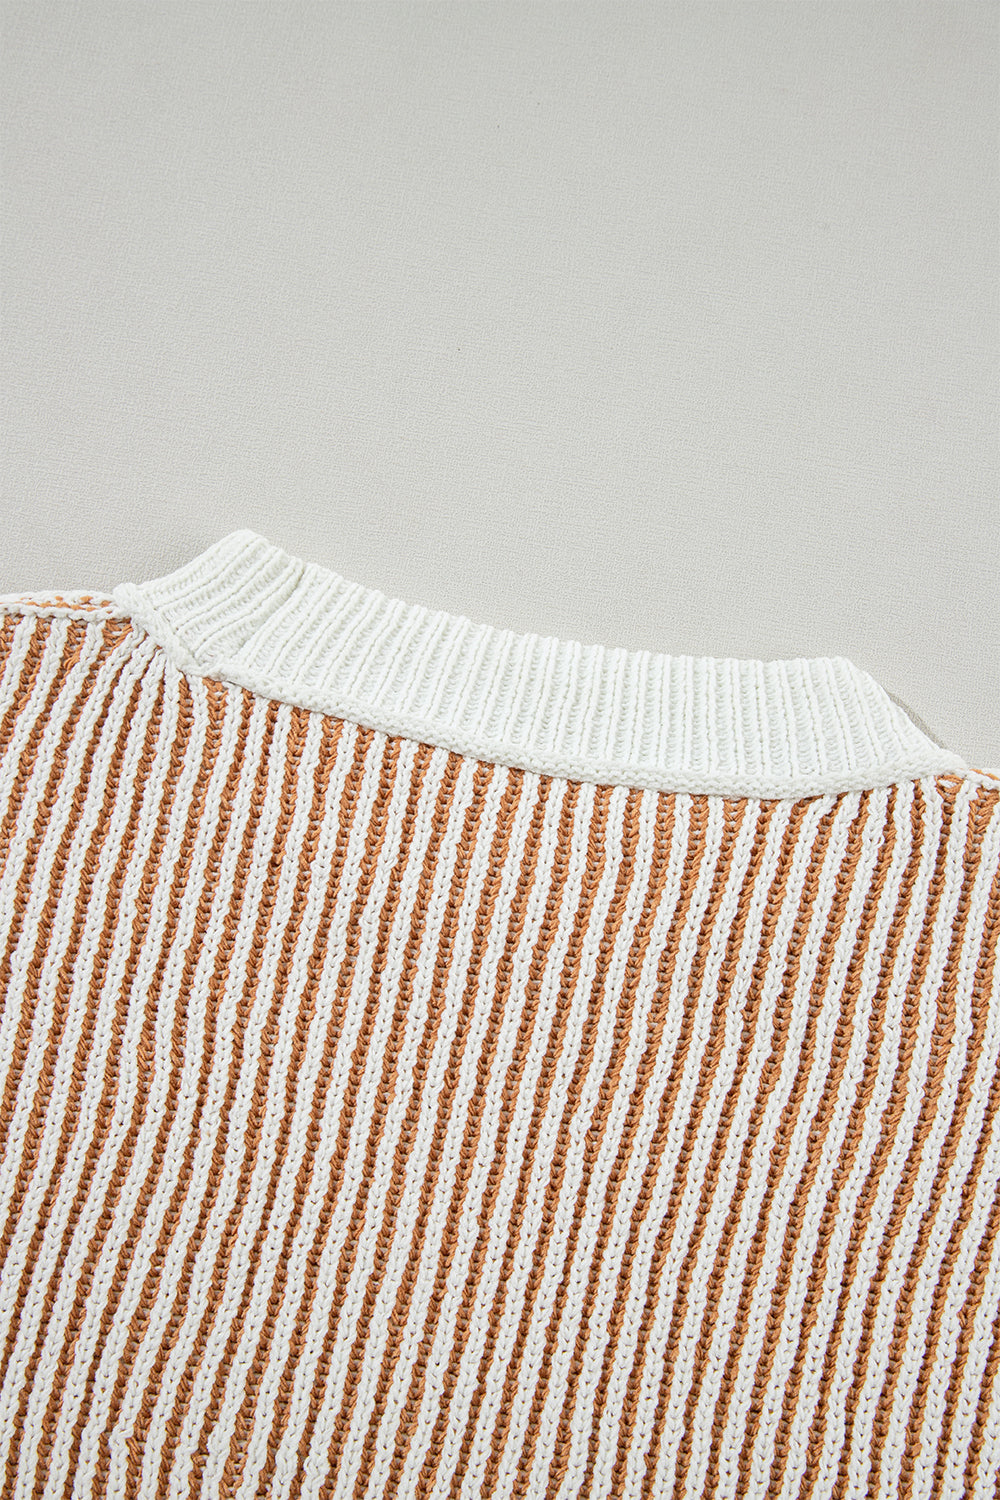 Chestnut Striped Contrast Trim Loose Sweater